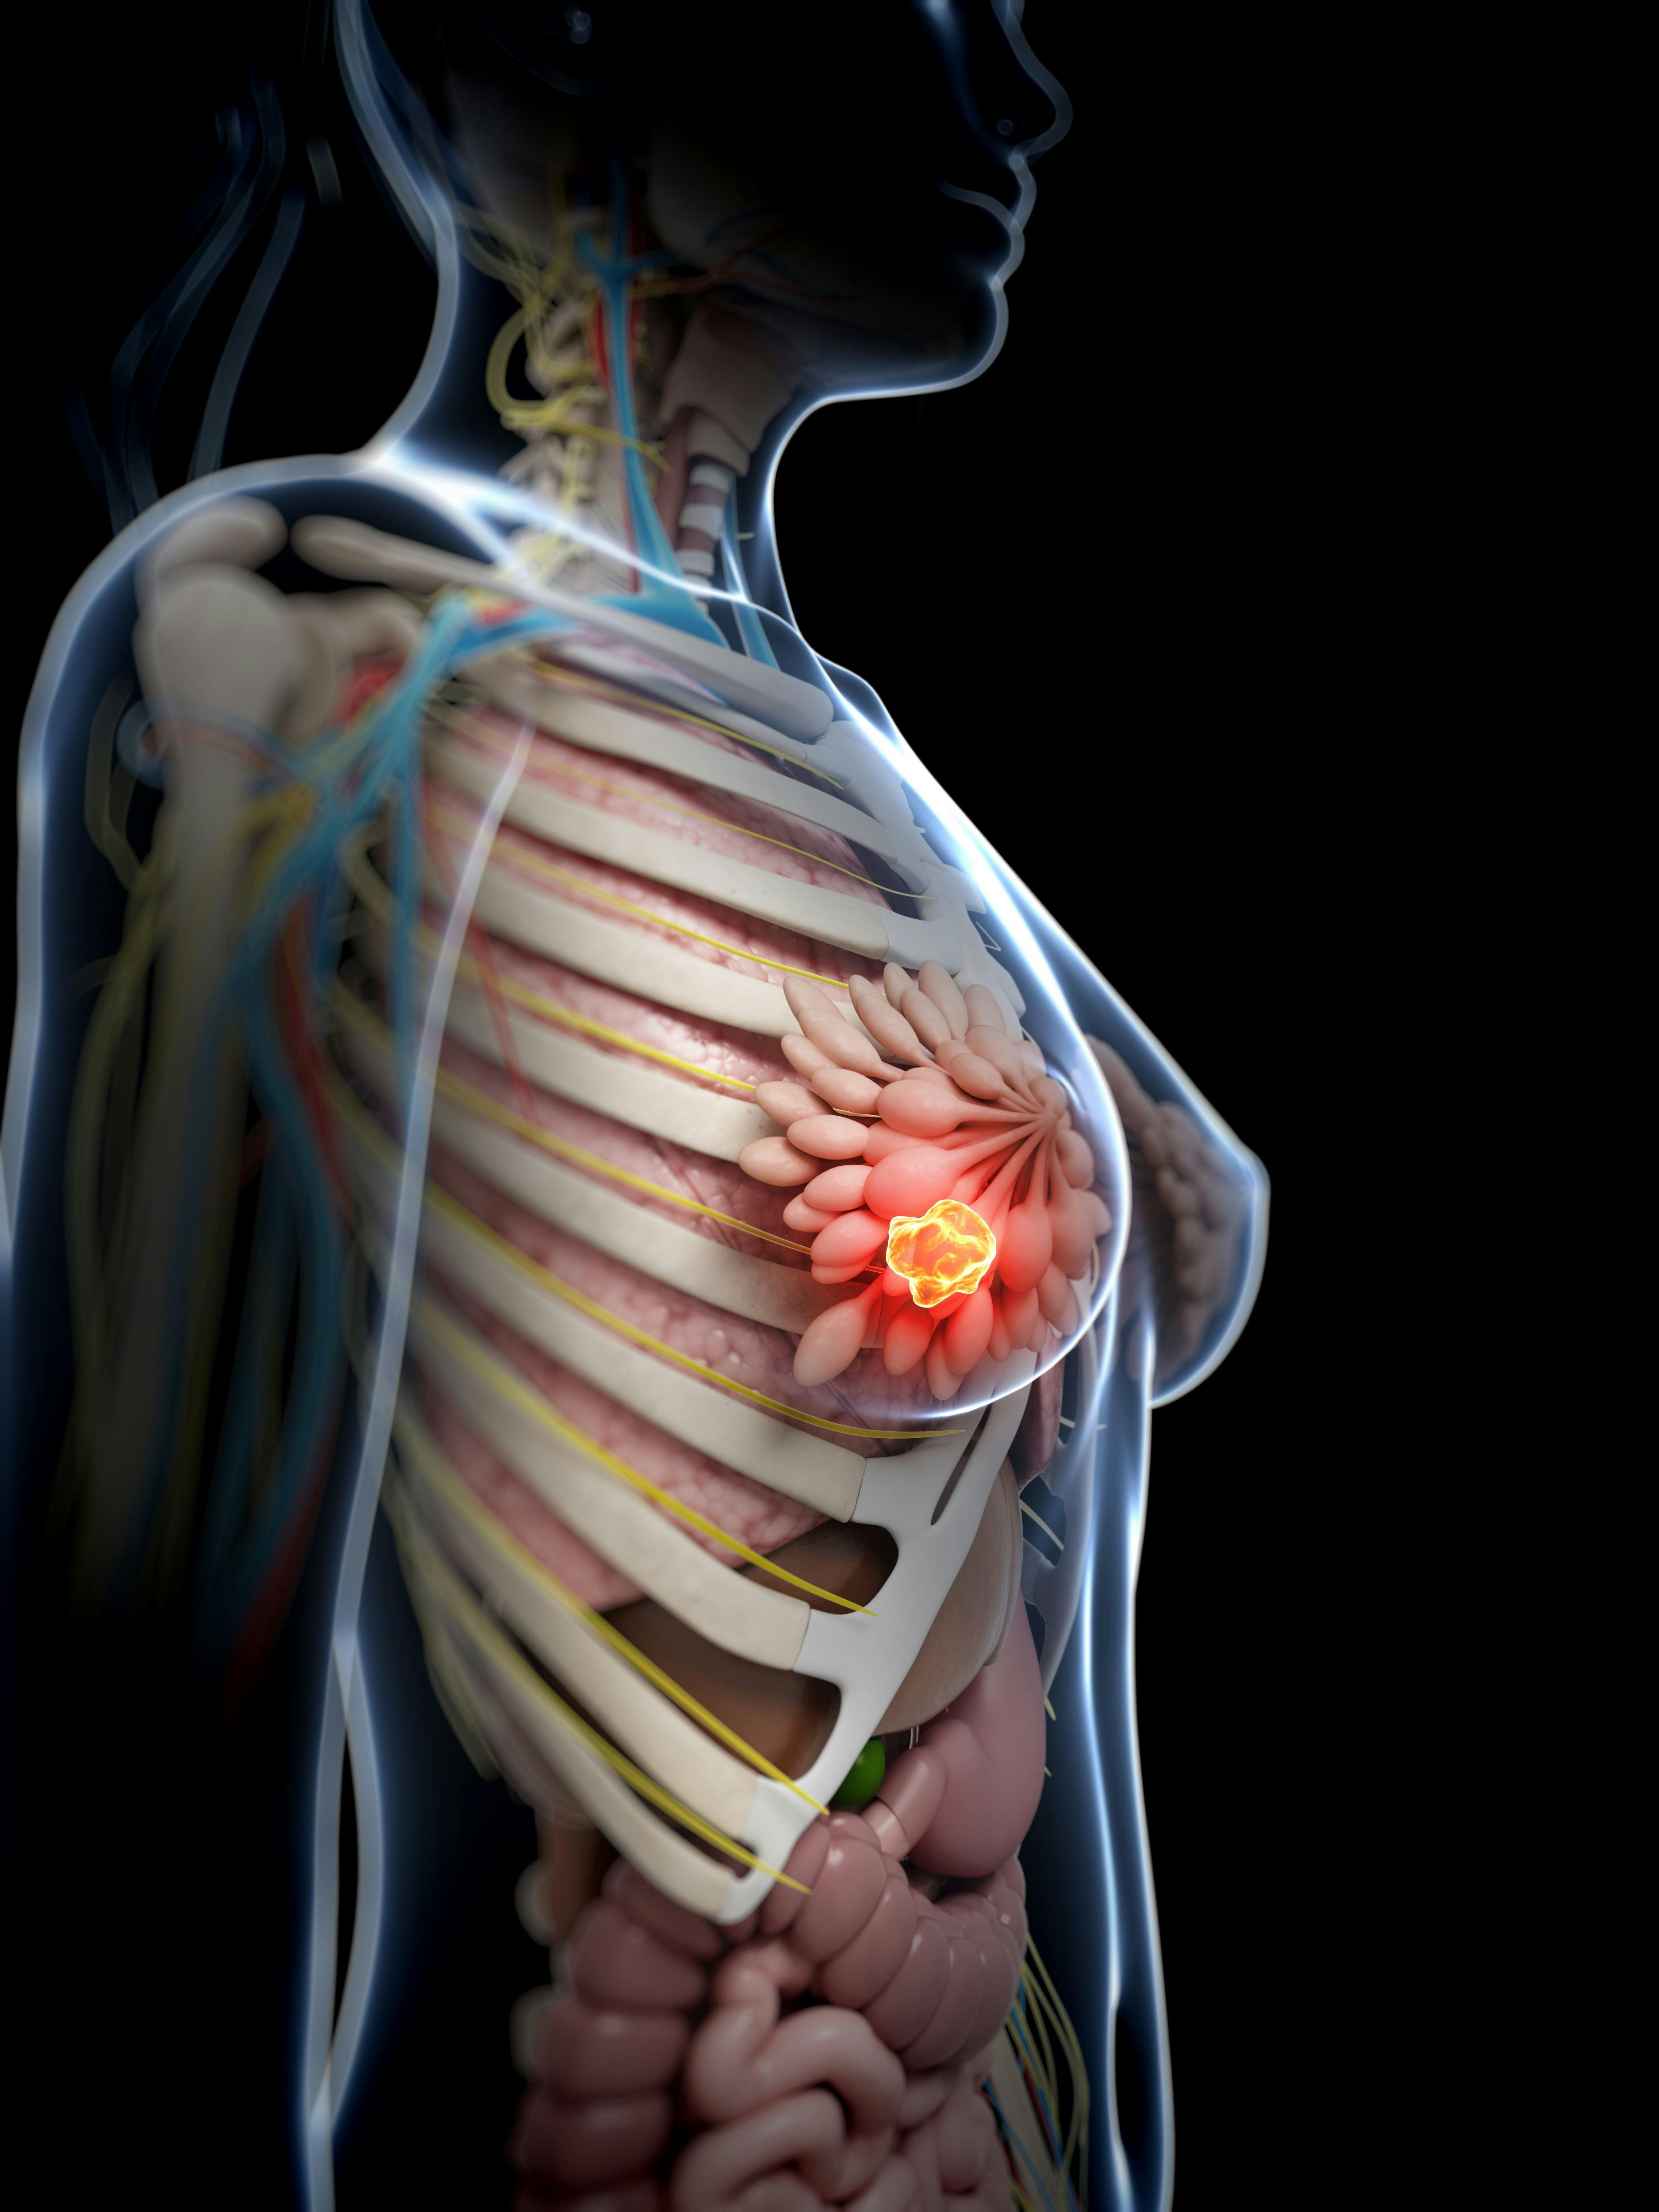 3D rendered graphic of breast cancer | Image Credit: Sebastian Kaulitzki - stock.adobe.com